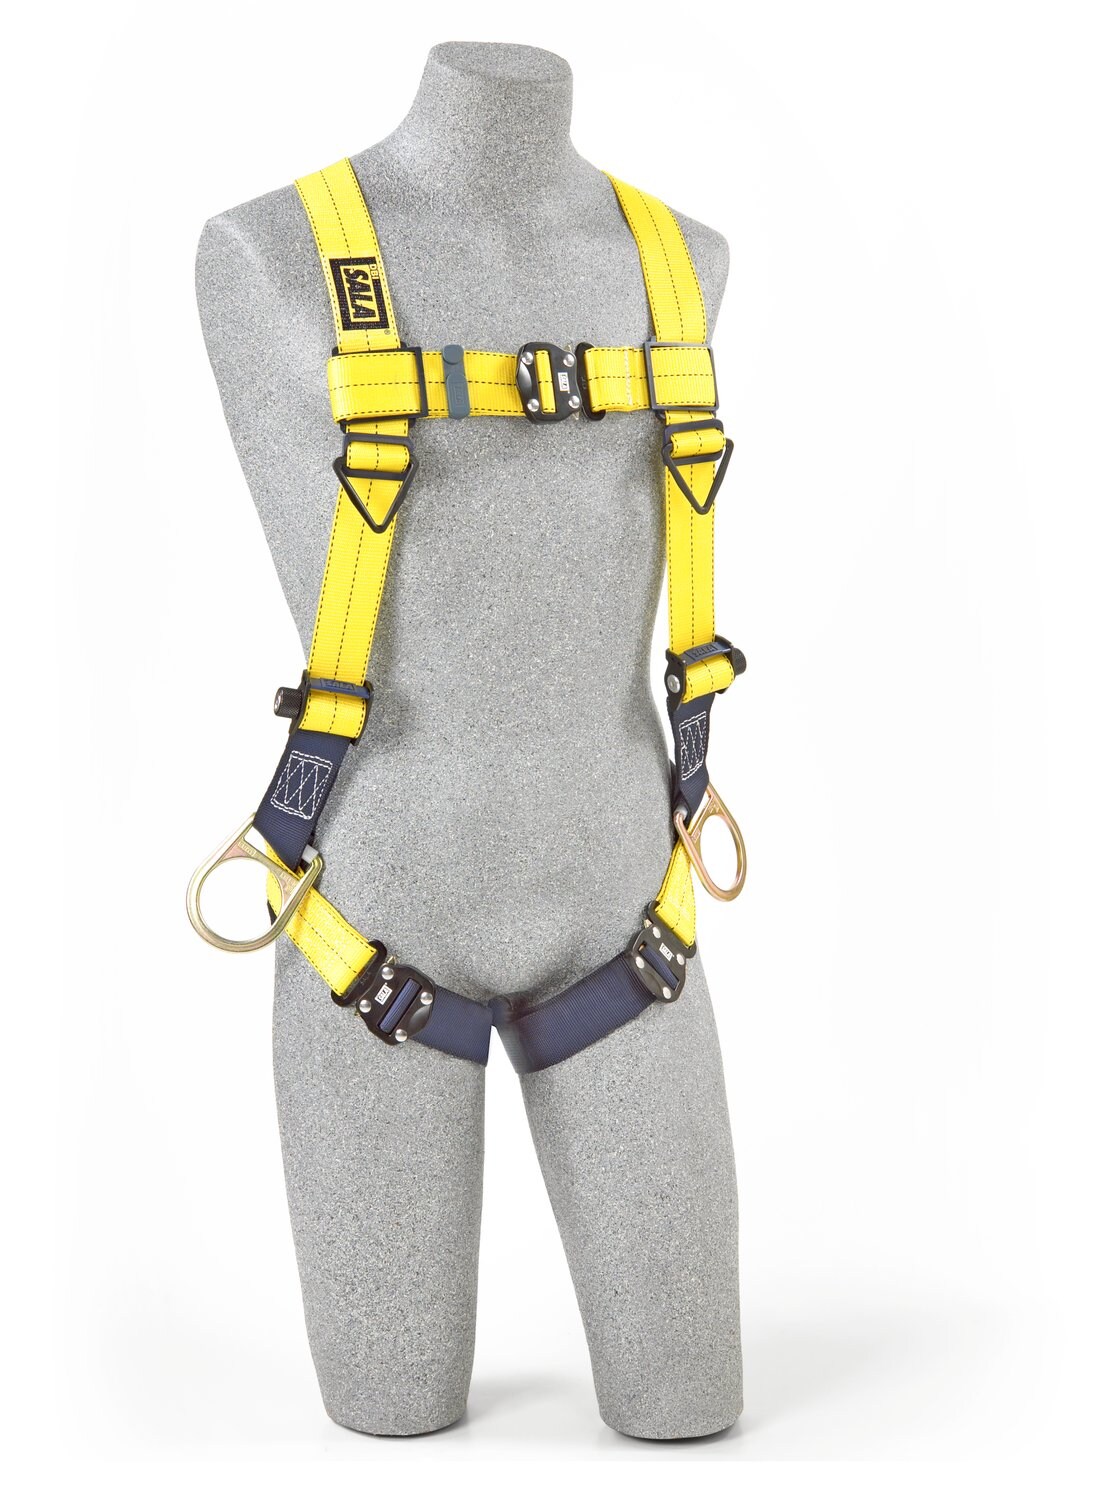 7012815729 - 3M DBI-SALA Delta Vest Positioning Safety Harness 1110625, Universal